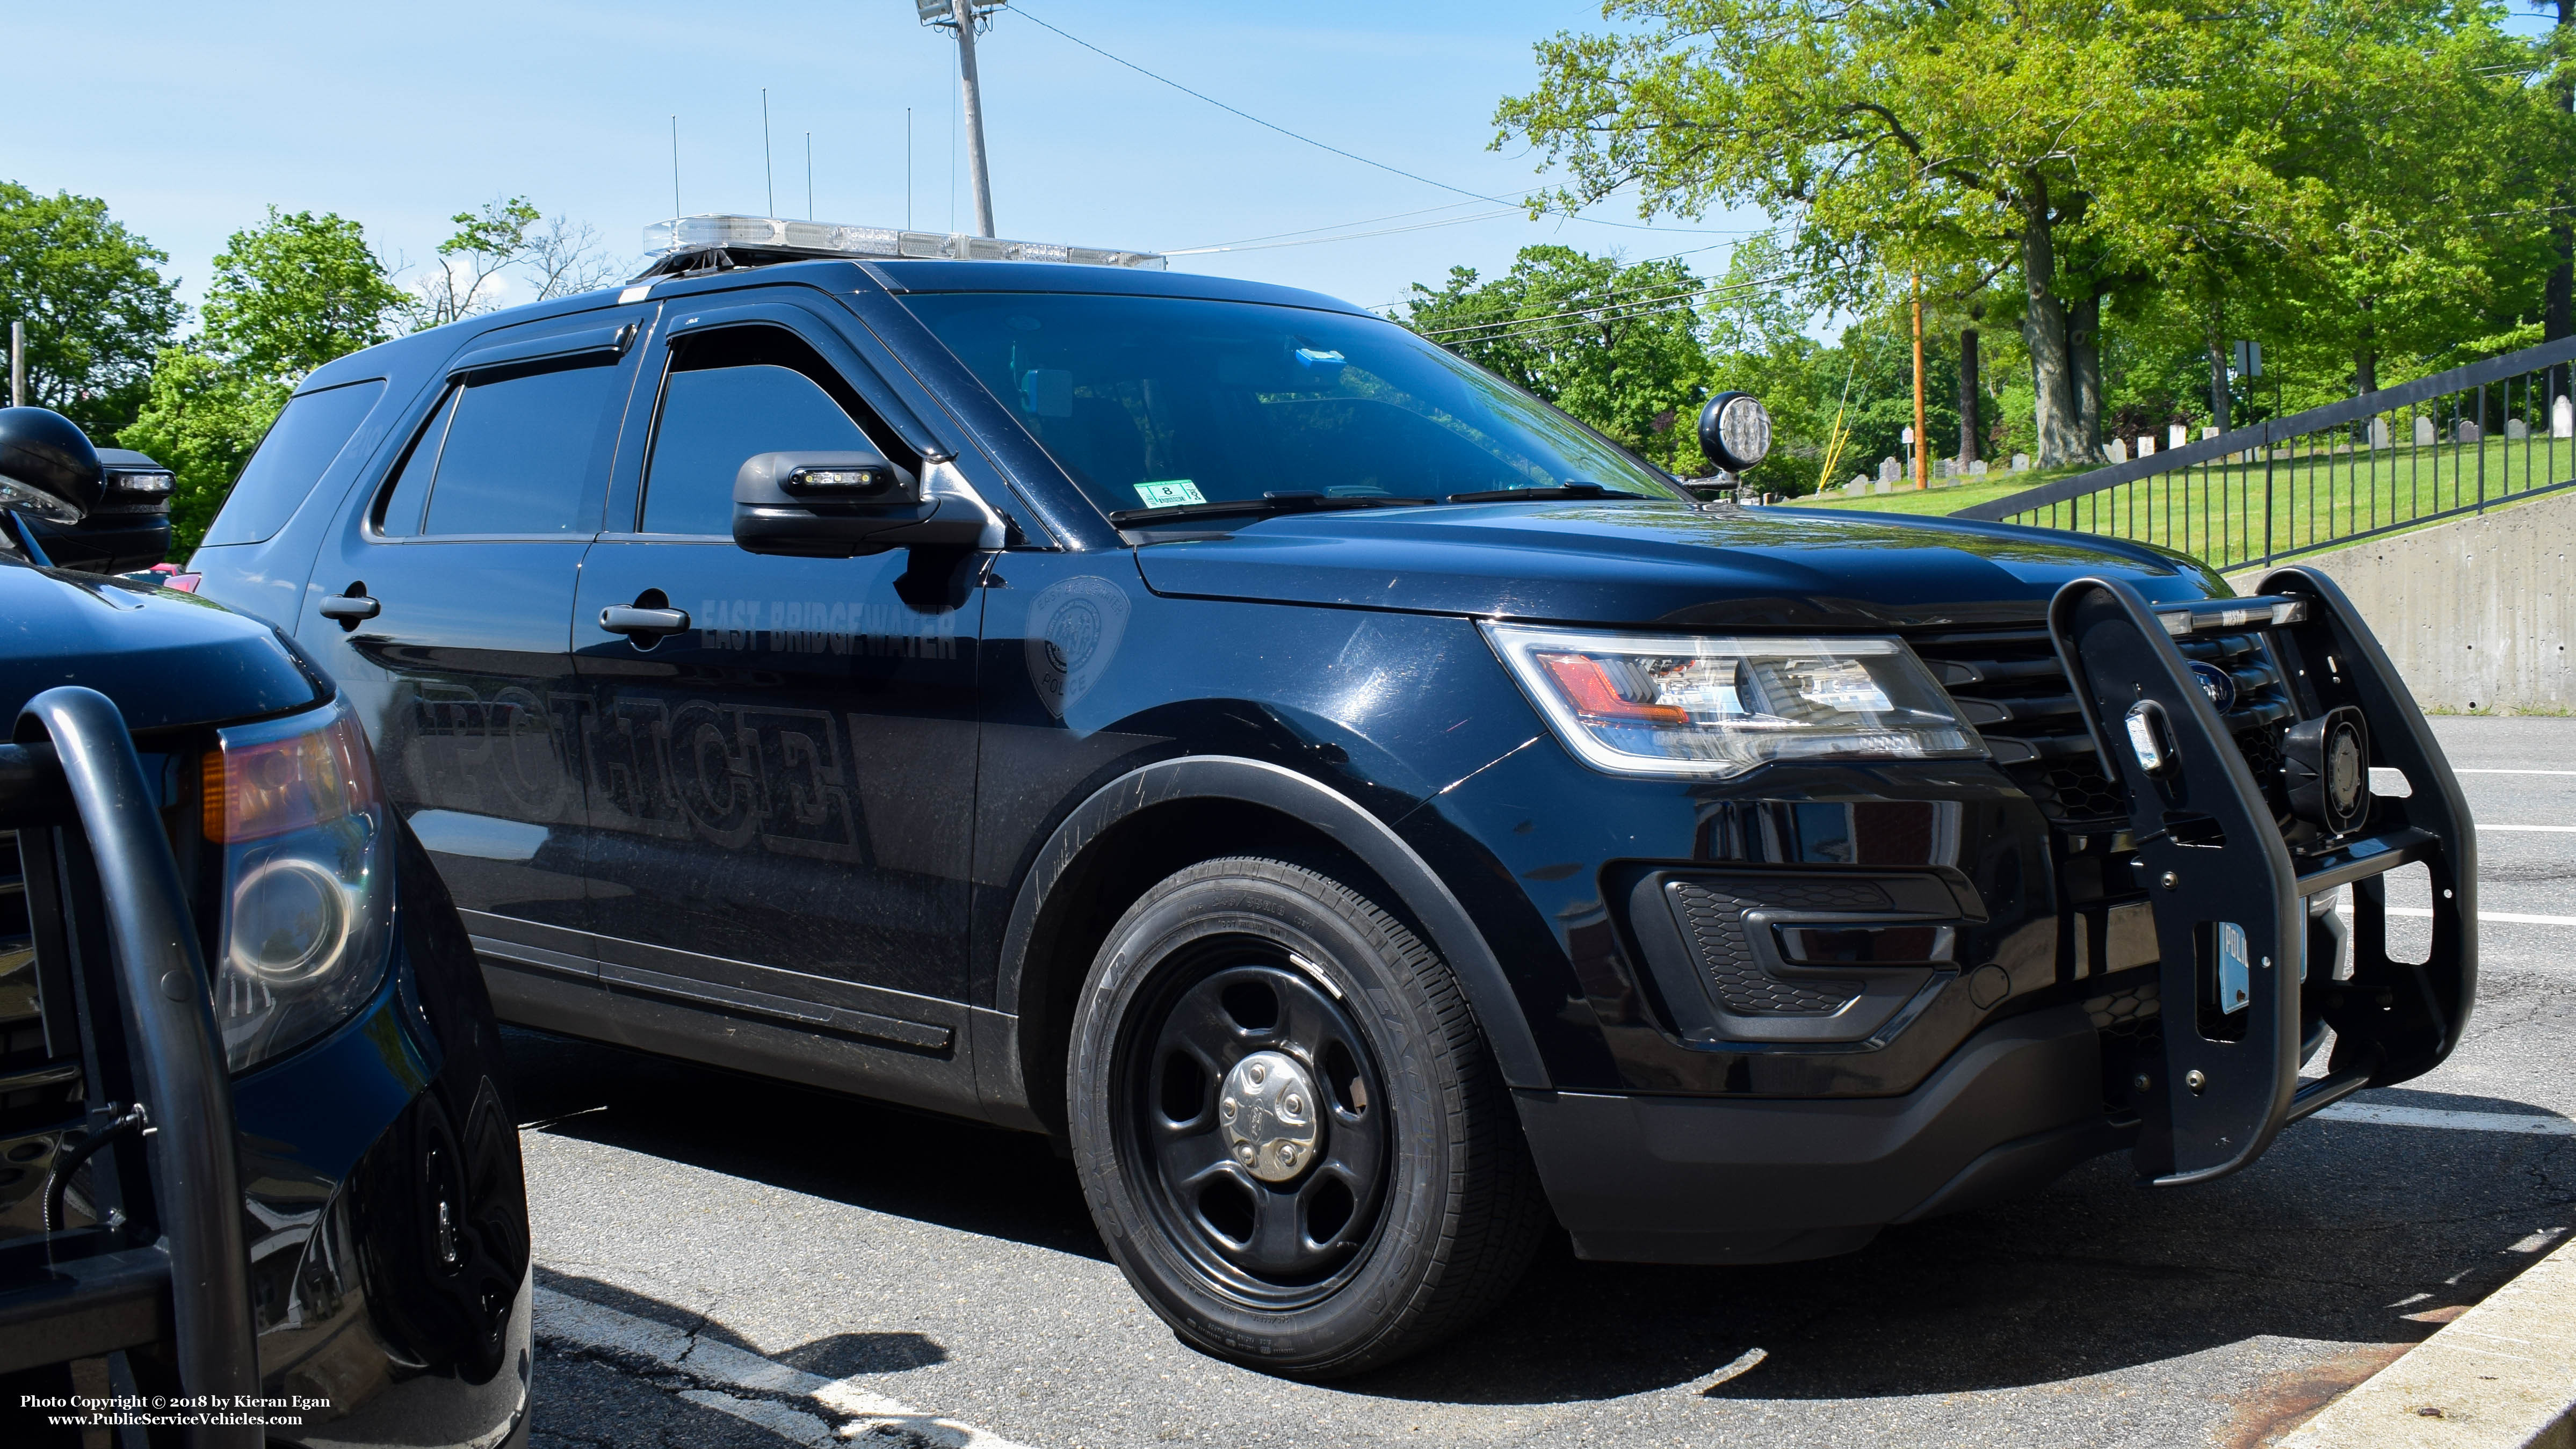 A photo  of East Bridgewater Police
            Cruiser 210, a 2016 Ford Police Interceptor Utility             taken by Kieran Egan